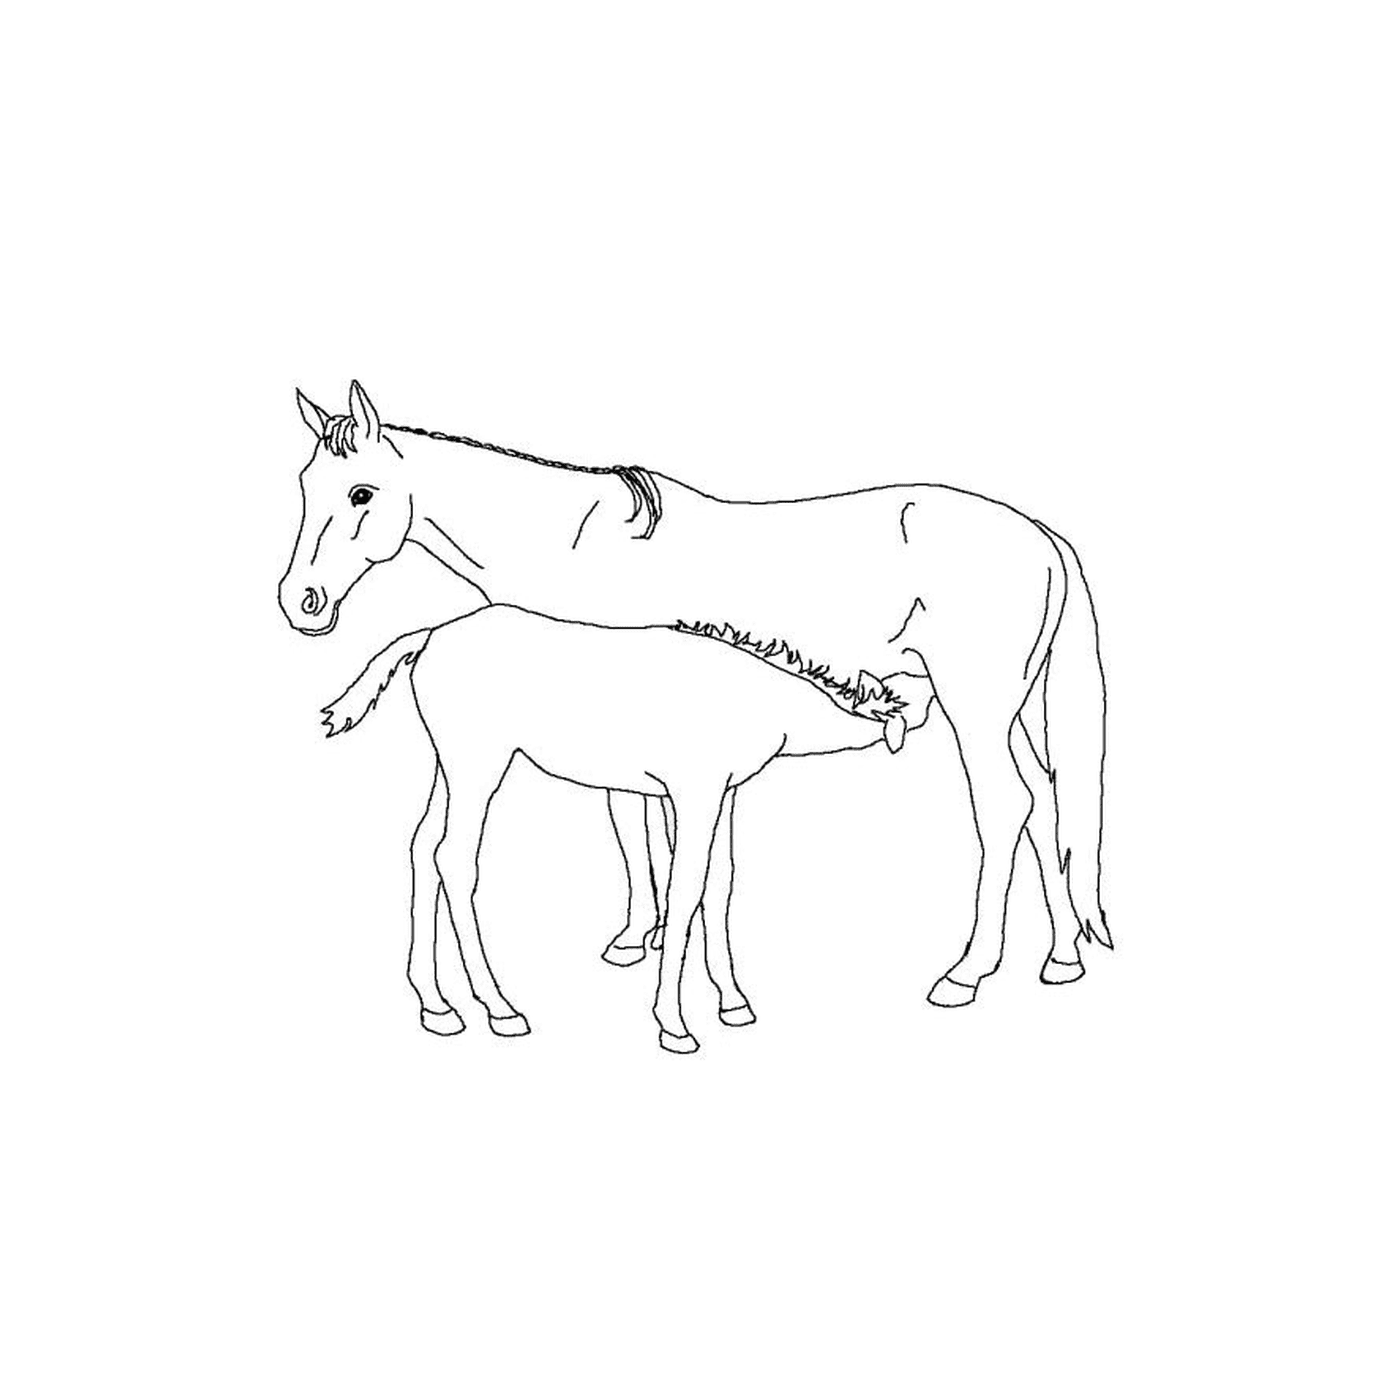  Caballos de Avicultura - Un caballo y un potro lado a lado 